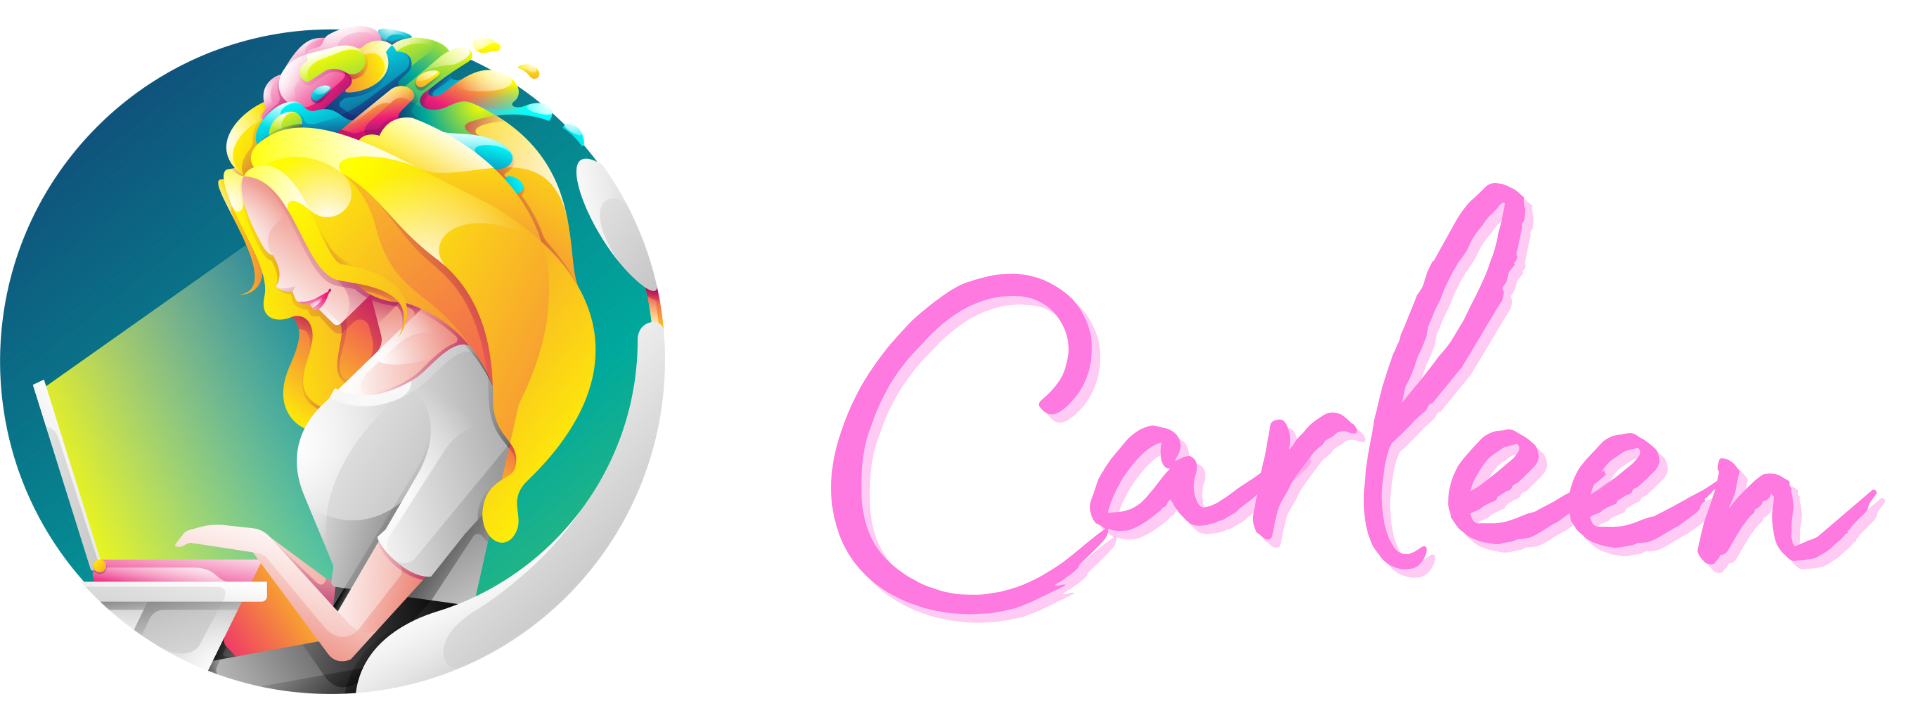 smartCarleen logo